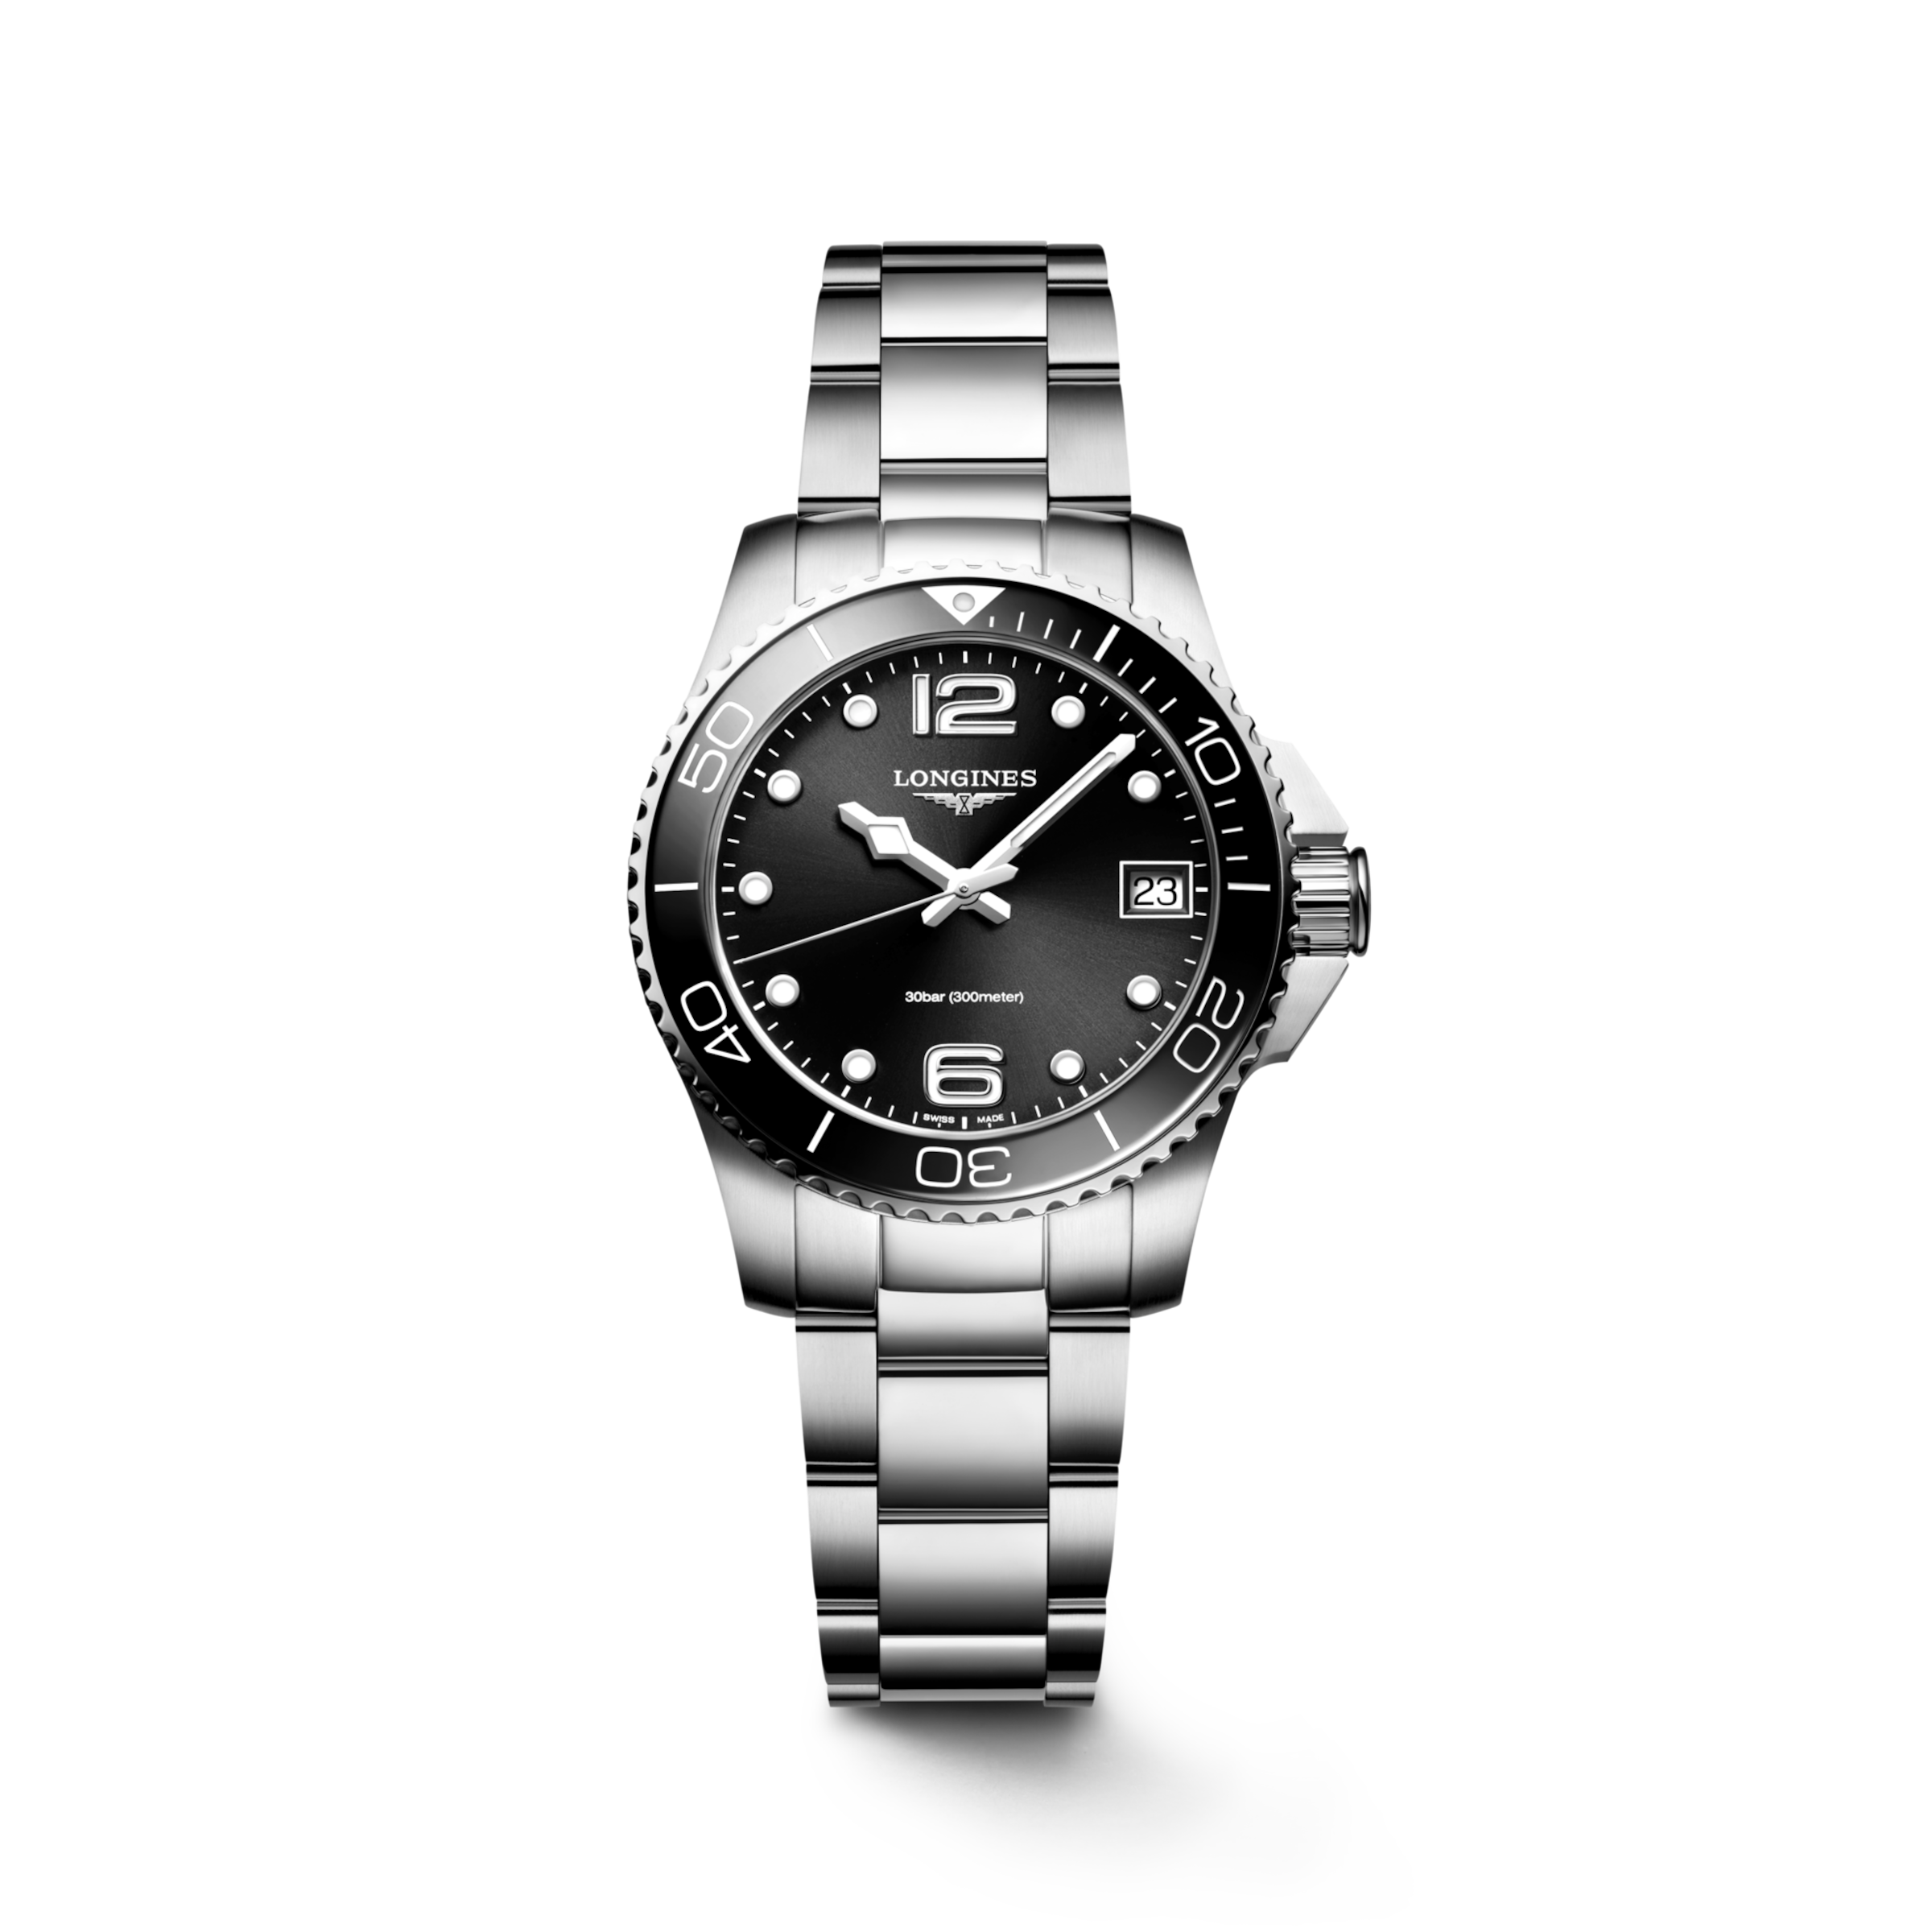 Longines HYDROCONQUEST Quartz Stainless steel and ceramic bezel Watch - L3.370.4.56.6